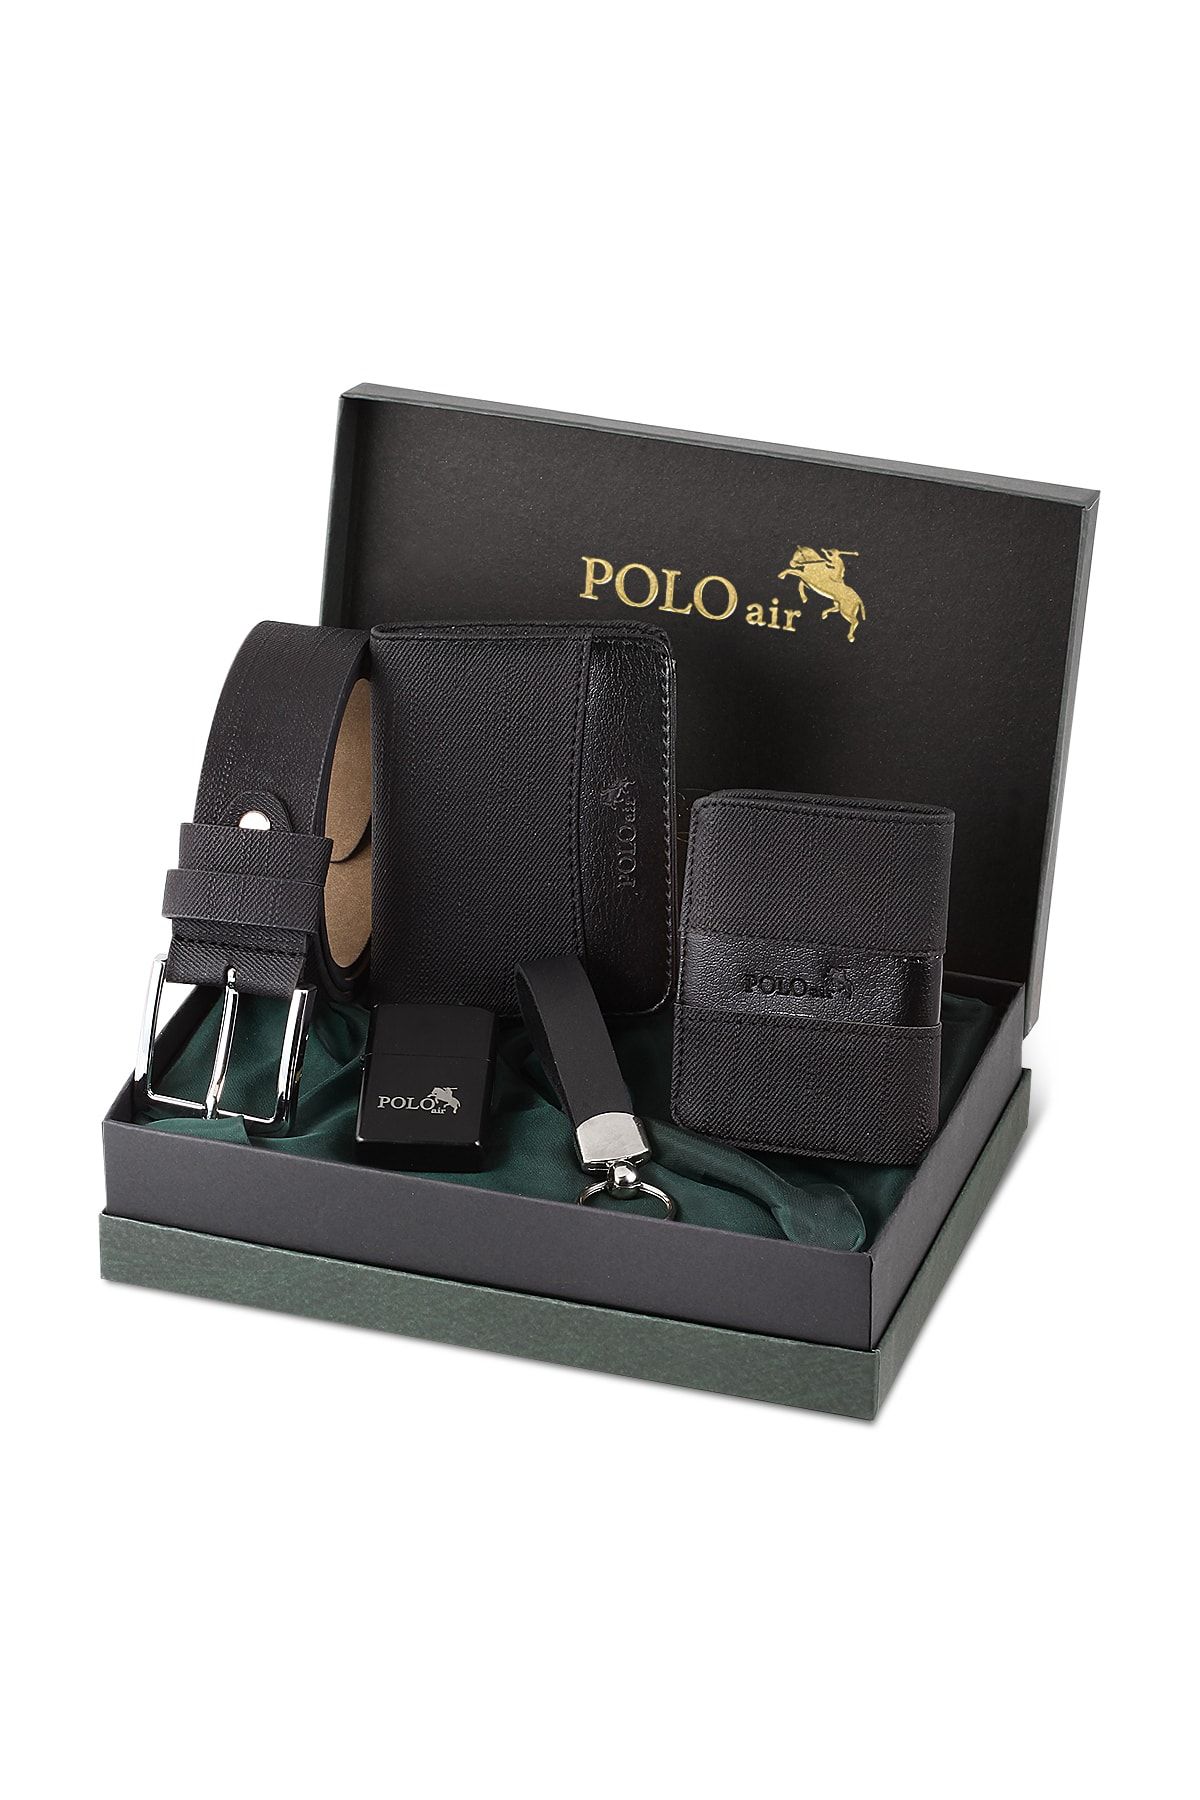 polo air Kemer Cüzdan Kartlık Anahtarlık Çakmak Hediyelik Kutusunda Siyah Set